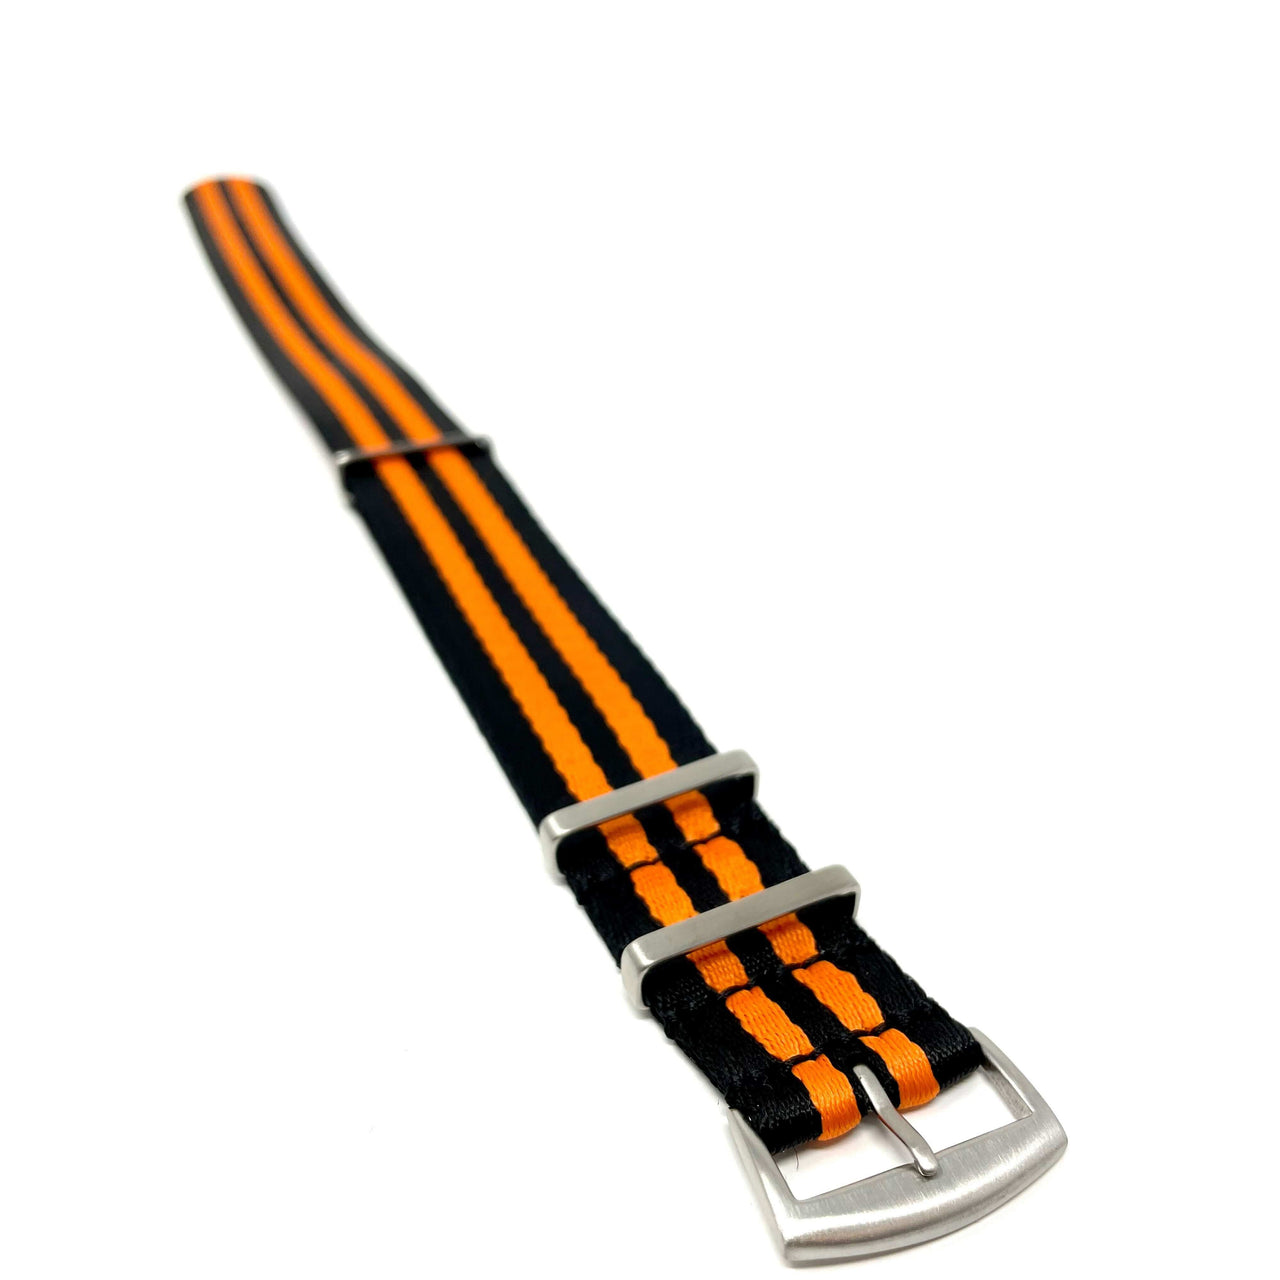 Seatbelt Military Style Watch Strap - Black & Orange Stripes